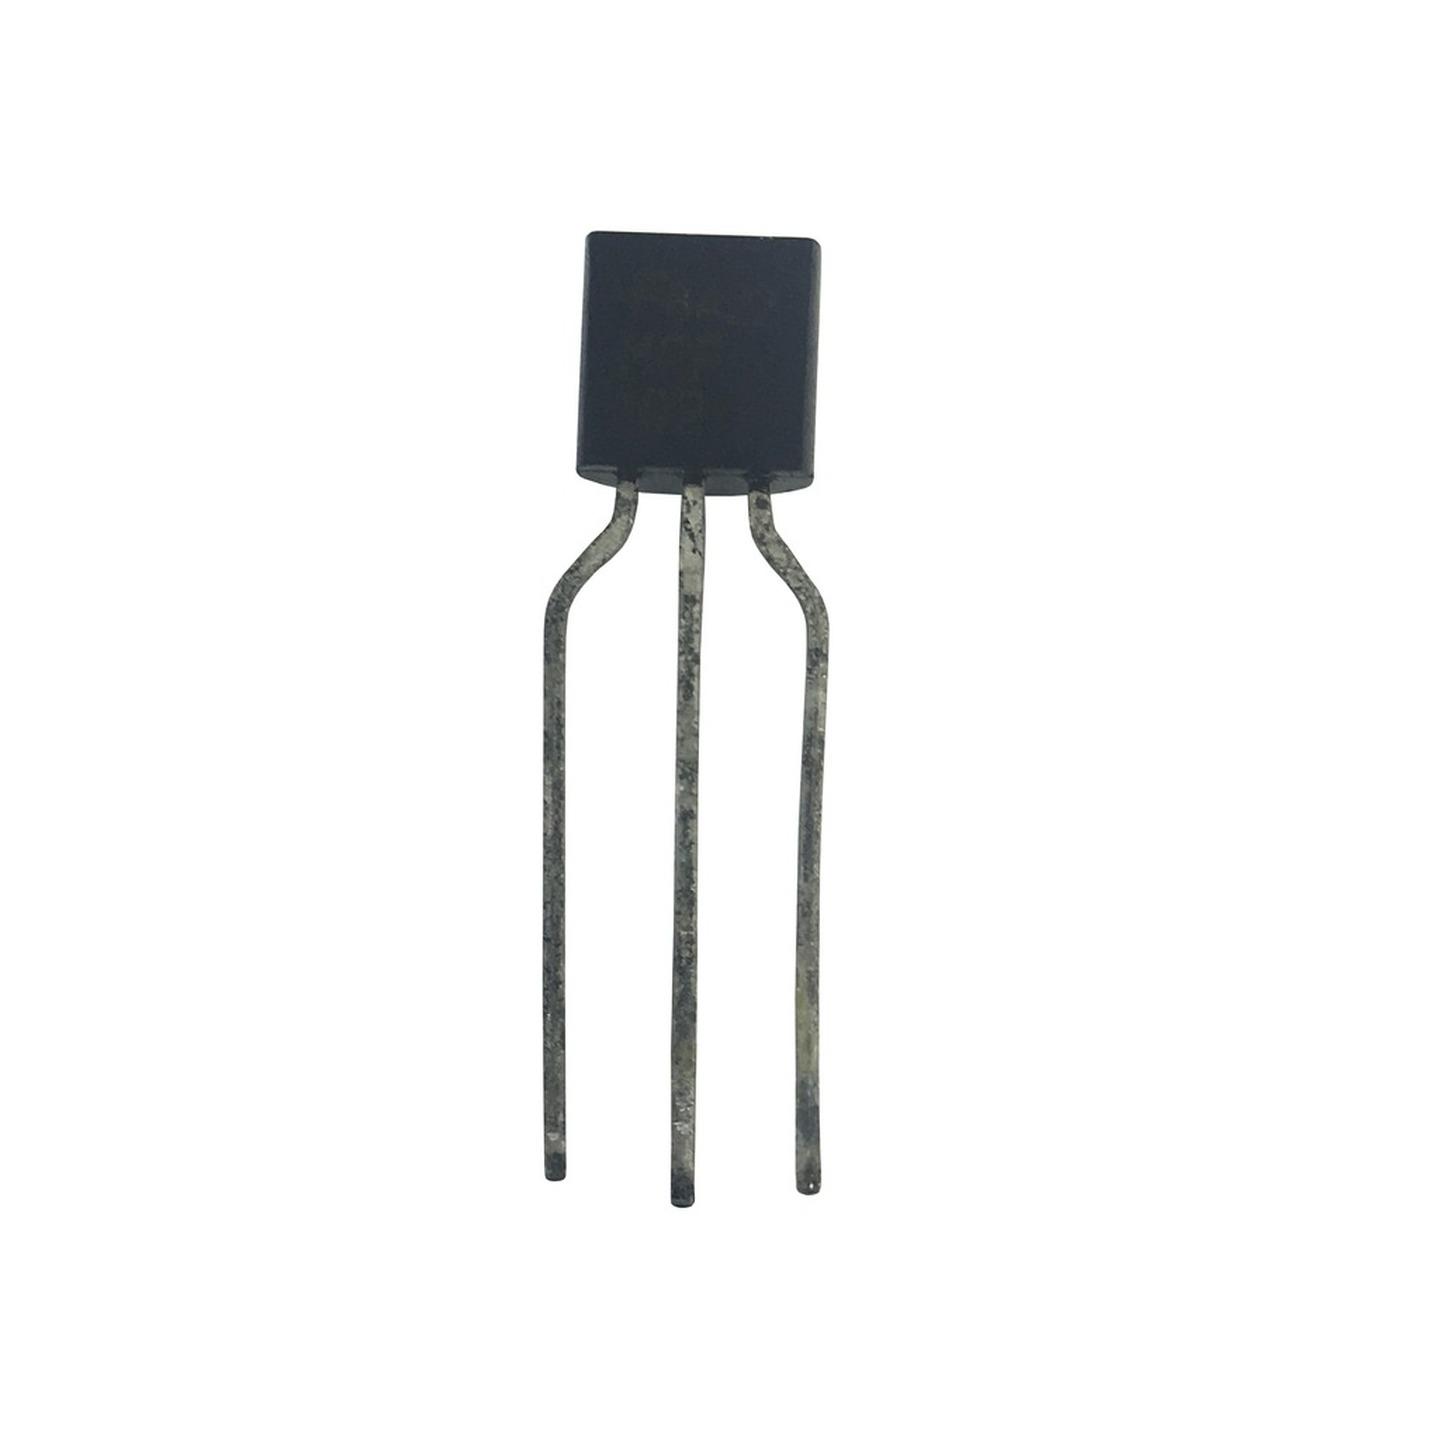 BC559 PNP Transistor